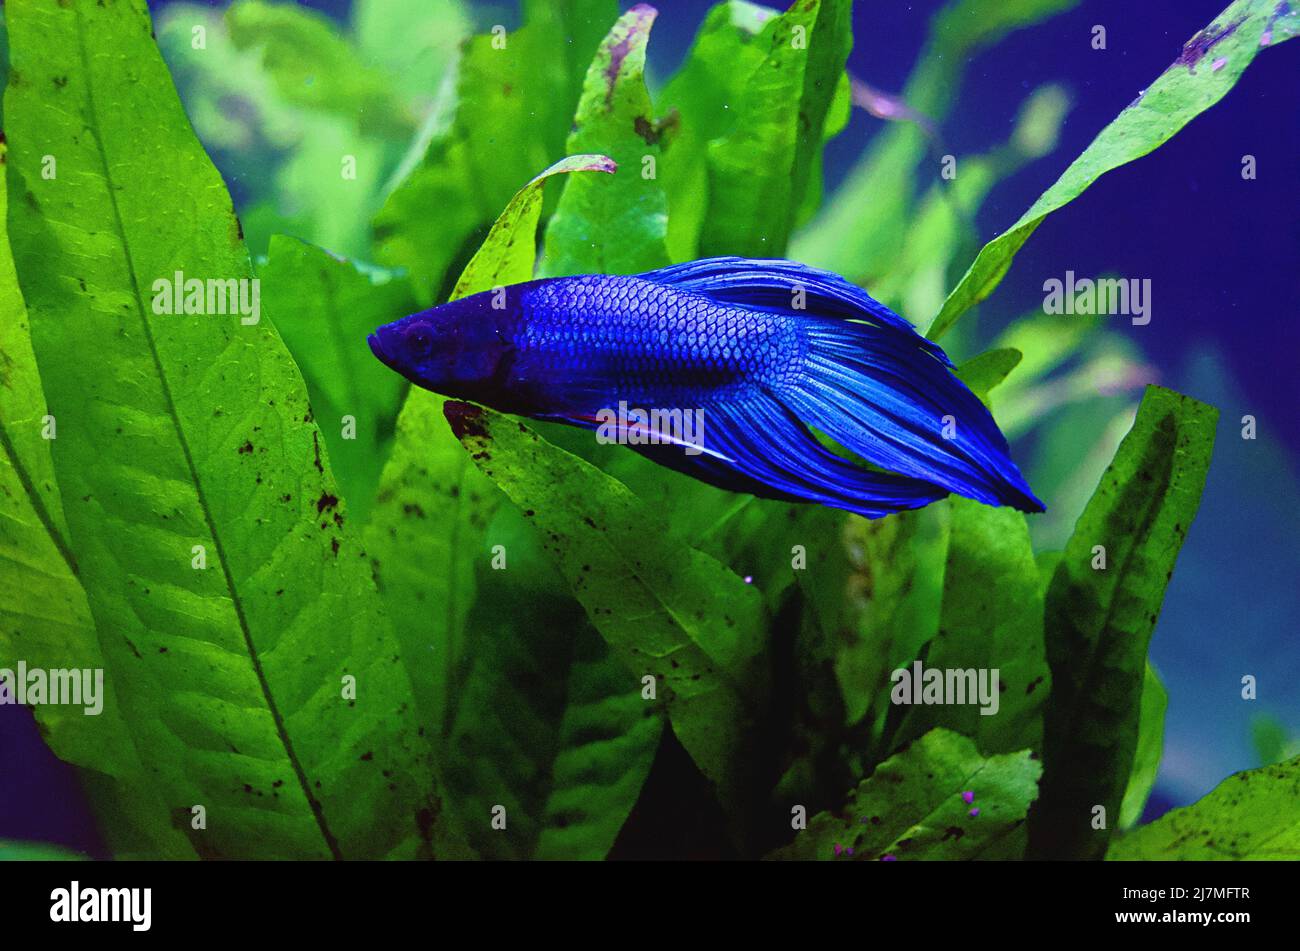 Blue PET Beta Pesce nuoto contro piante verdi Foto Stock